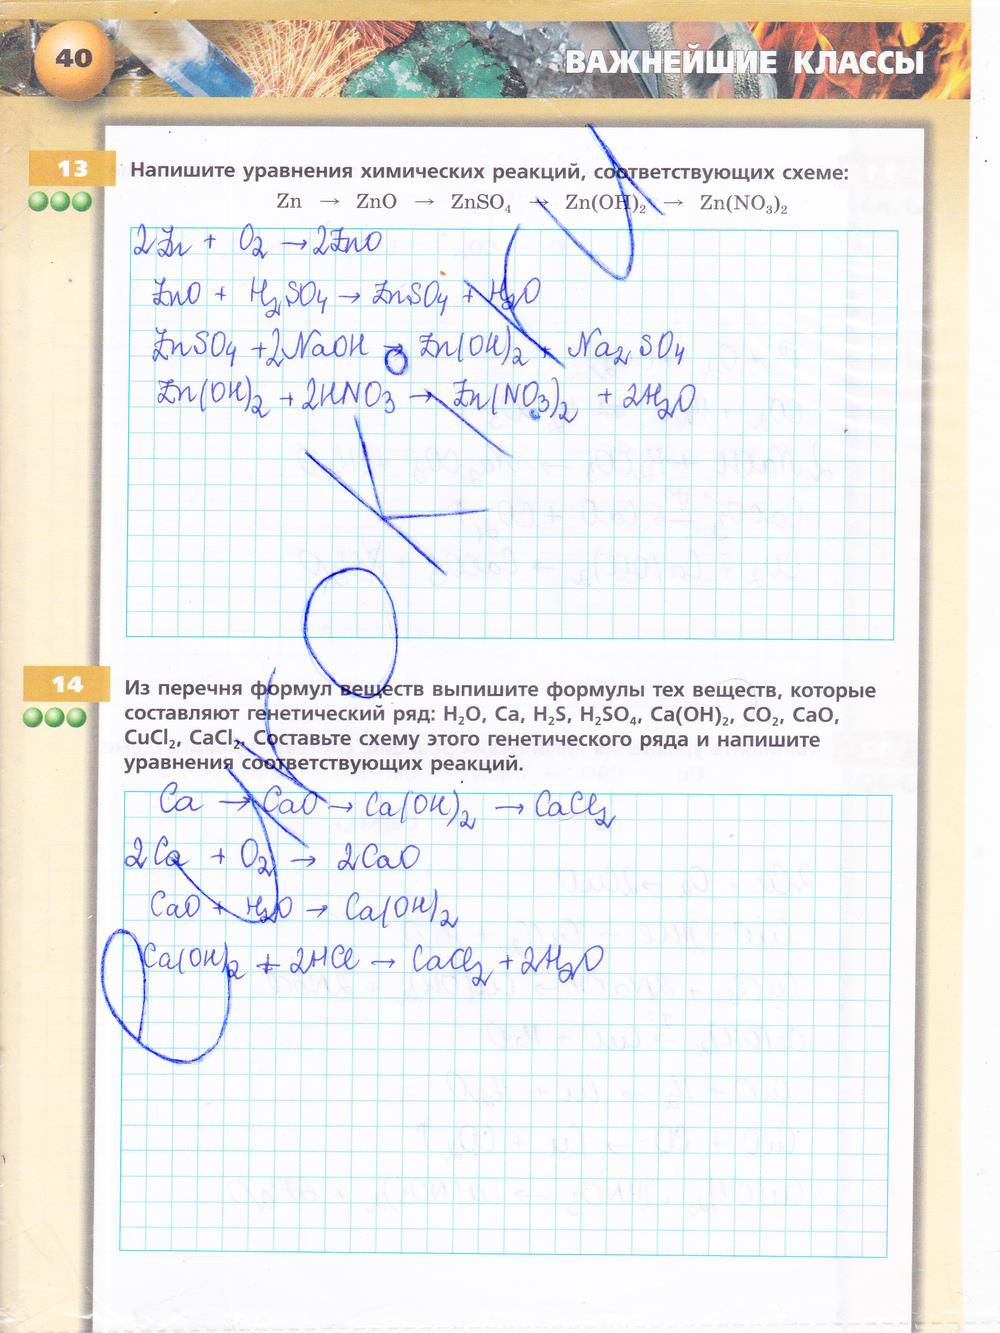 гдз 8 класс тетрадь-тренажёр страница 40 химия Гара